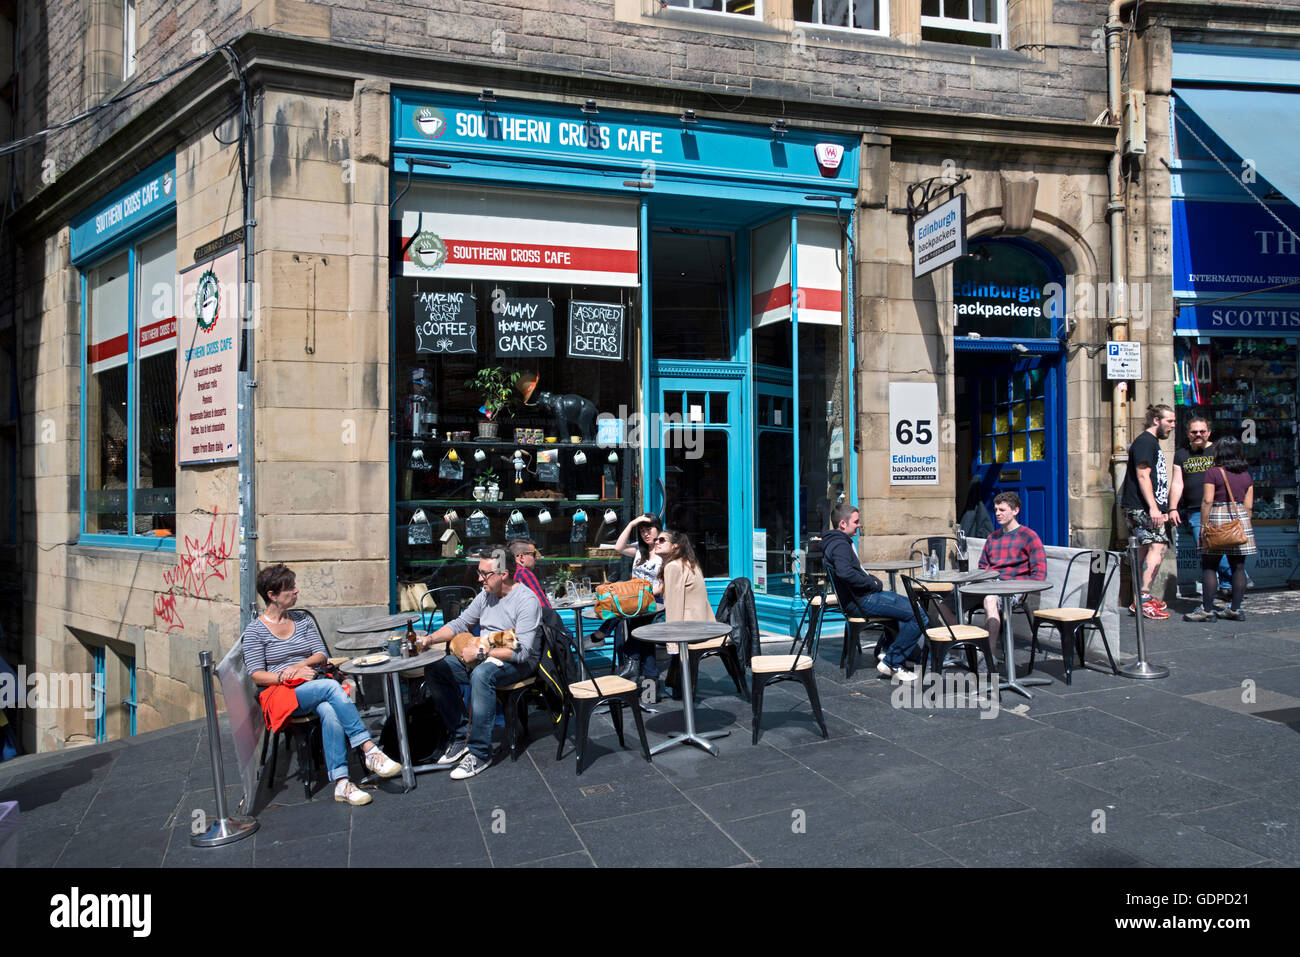 Diners outside the Southern Cross Cafe in Edinburgh's Cockburn Street enjoying the Summer sunshine. Stock Photo